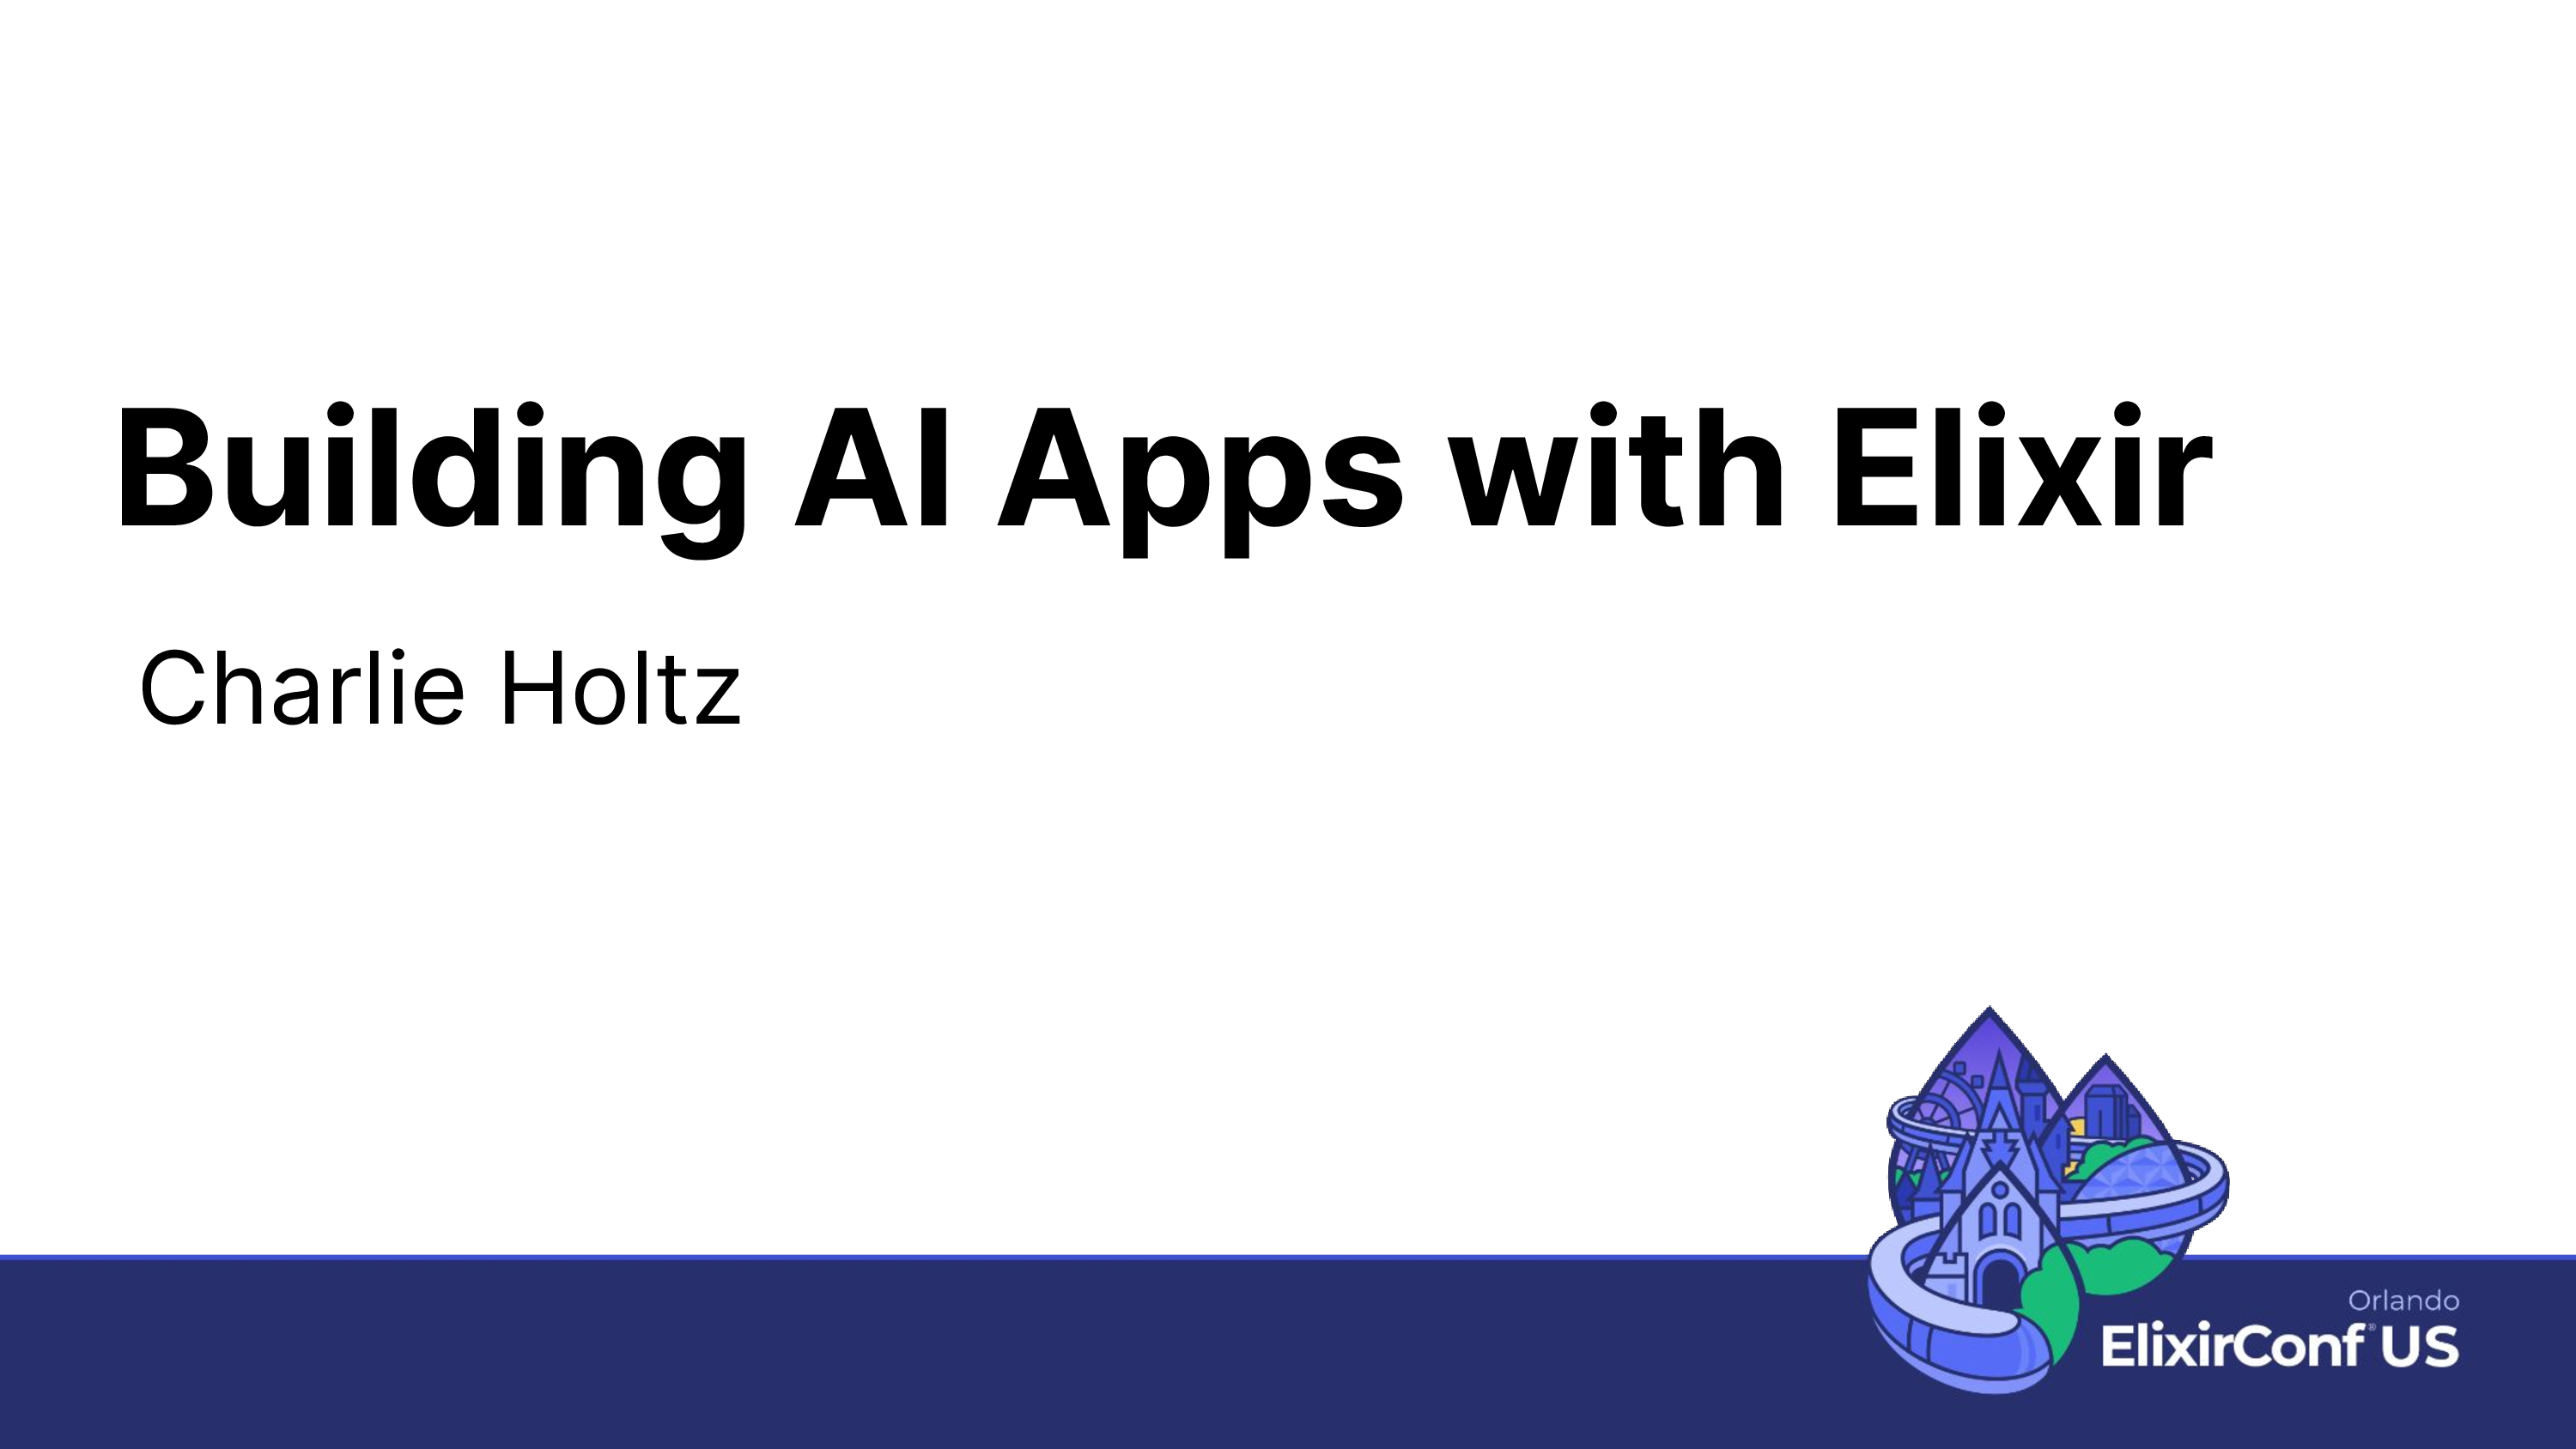 Building Al Apps with Elixir
Charlie Holtz
